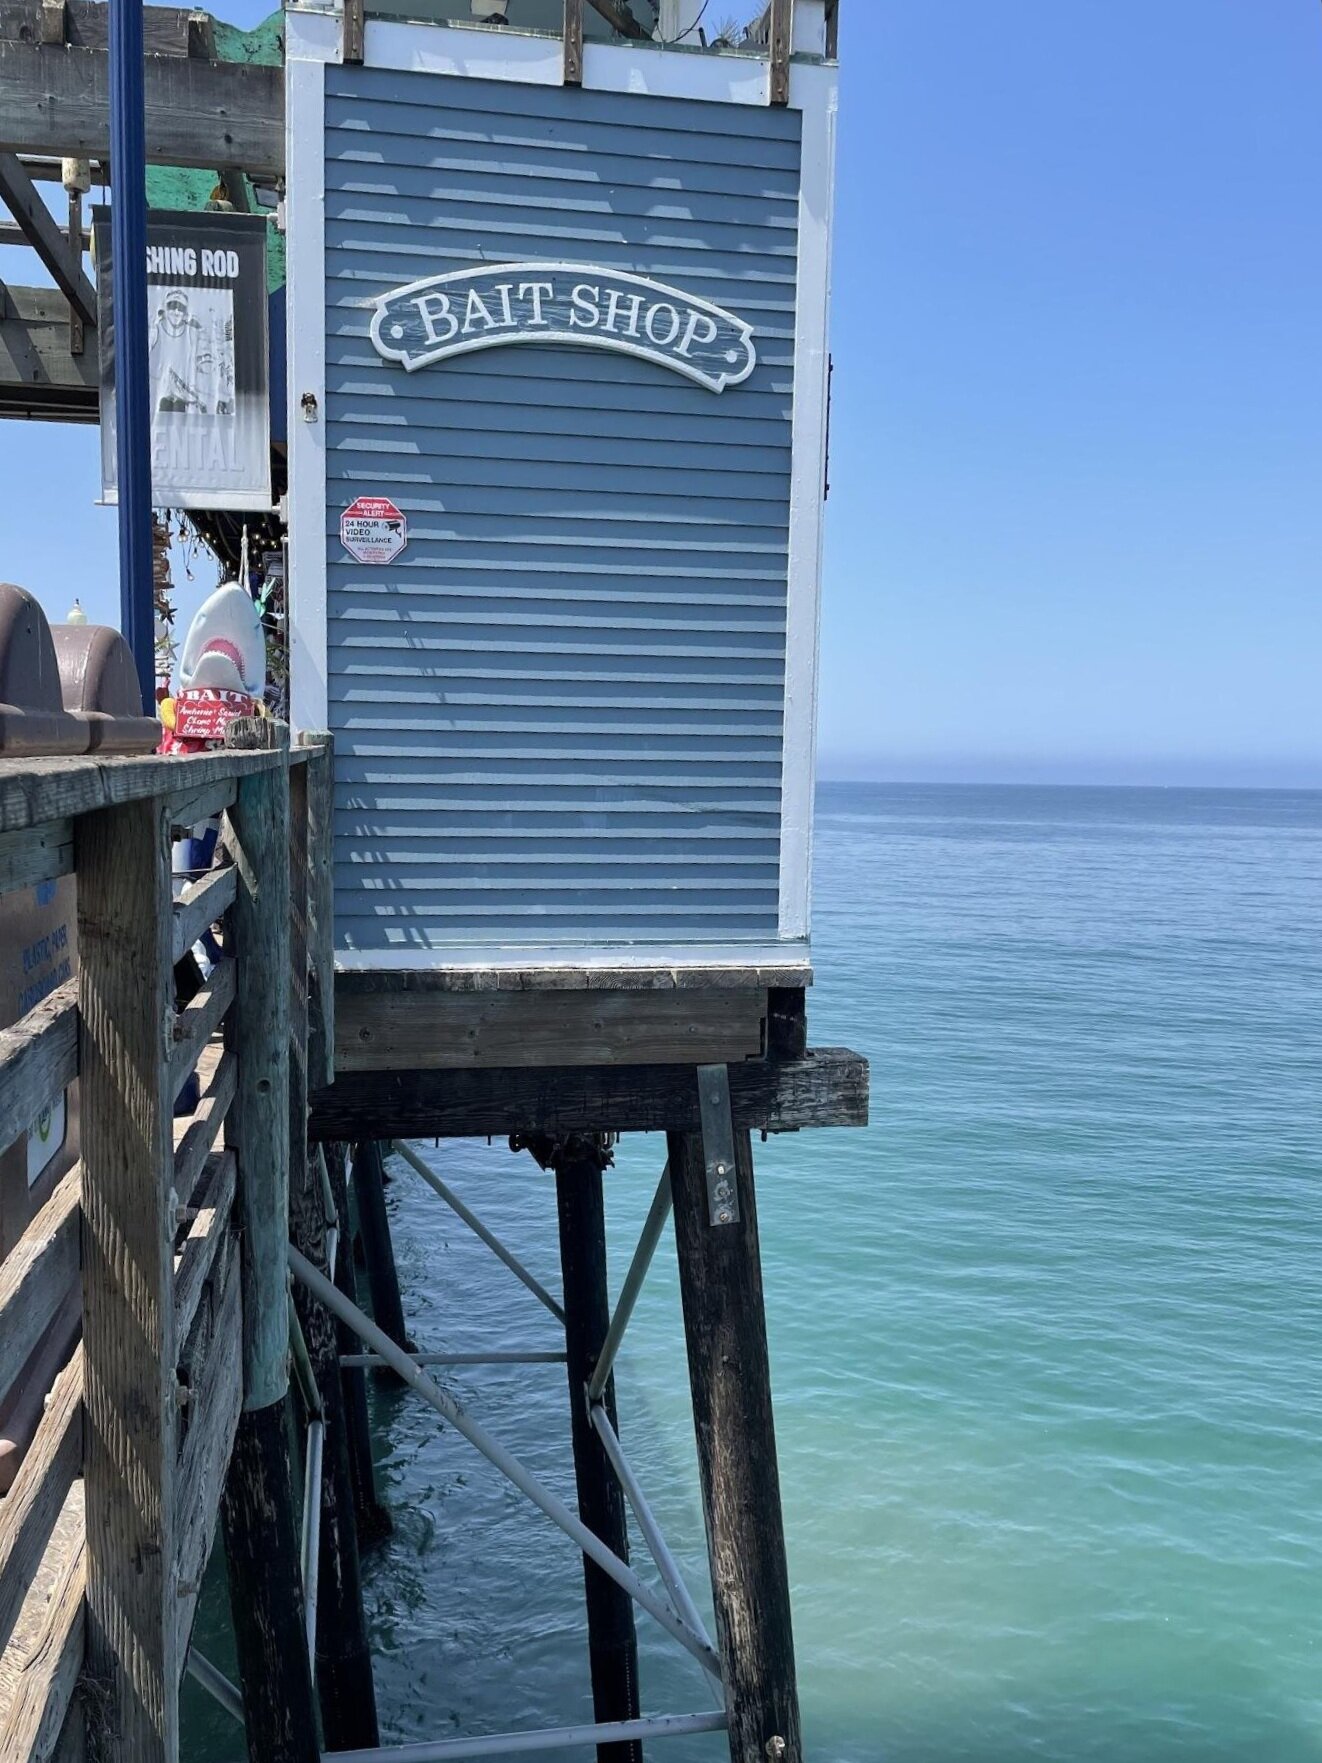 About — Oceanside Pier & Bait